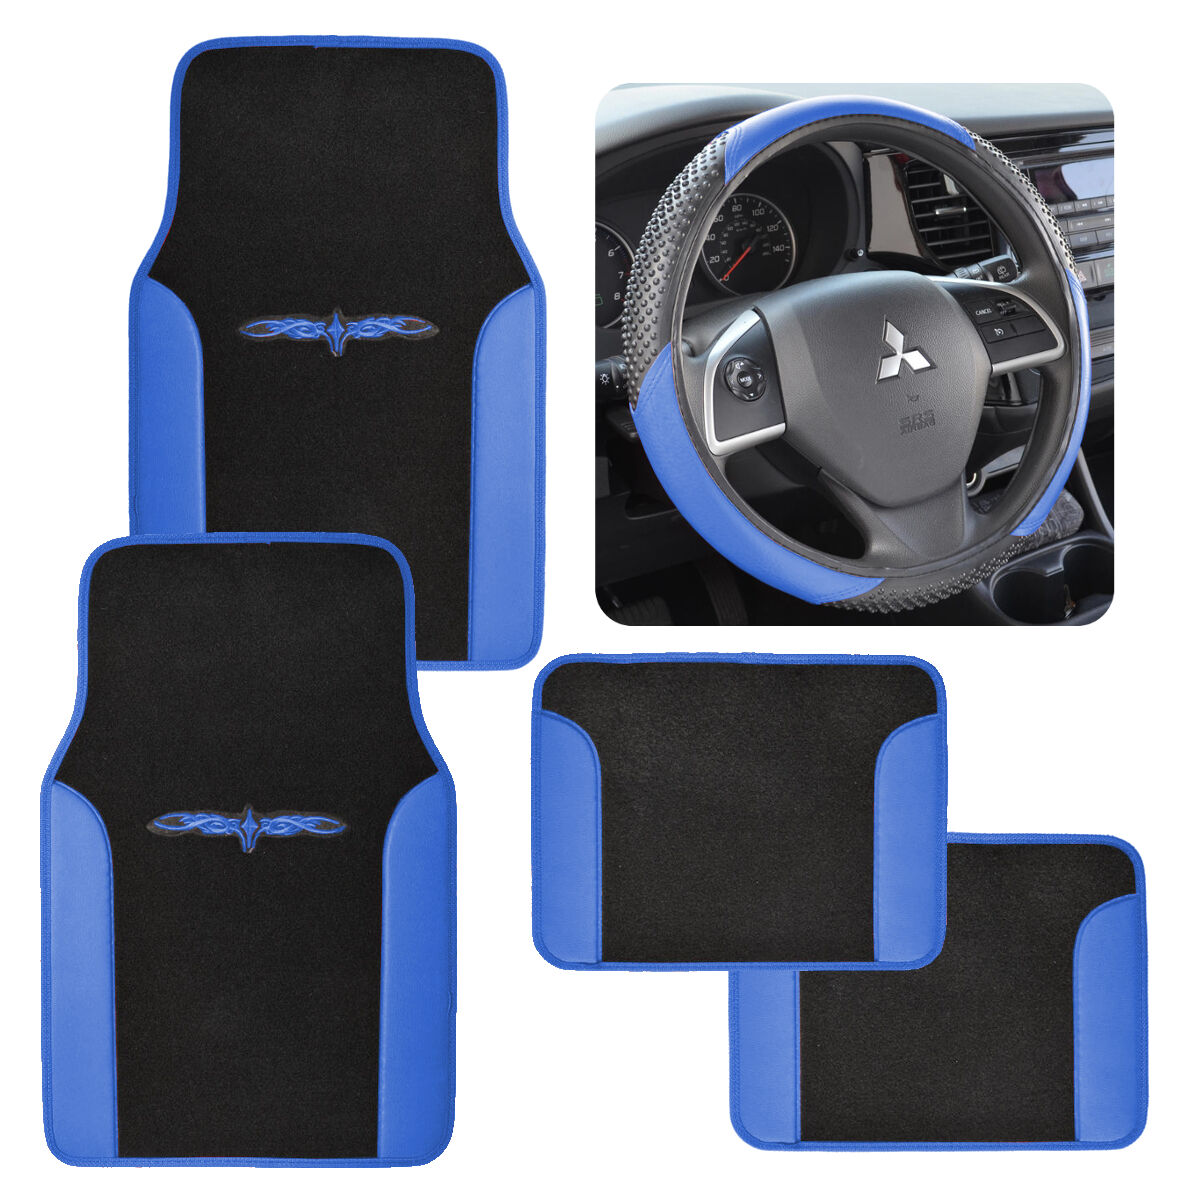 2tone Carpet/vinyl Floor Mats For Car Suv Van Blue/black W/ Steering Wheel Cover